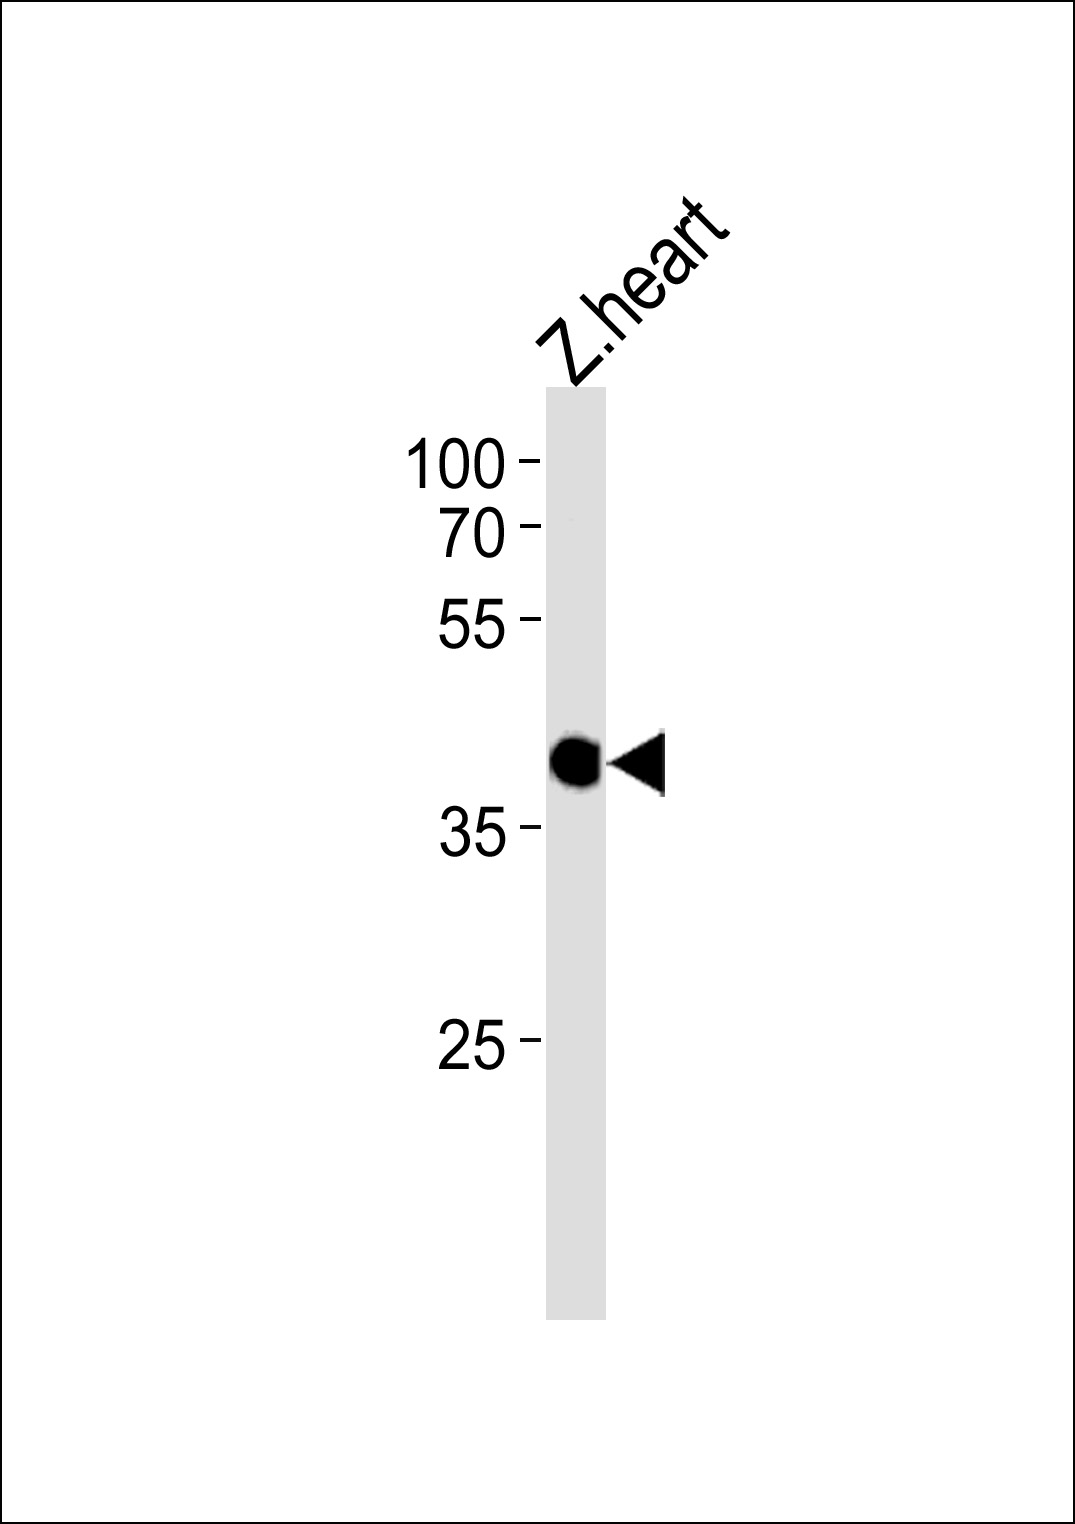 DANRE ccdc89 Antibody (C-term) (Cat. #Azb10026b) western blot analysis in zebra fish heart tissue lysates (35ug/lane).This demonstrates the DANRE ccdc89 antibody detected the DANRE ccdc89 protein (arrow).